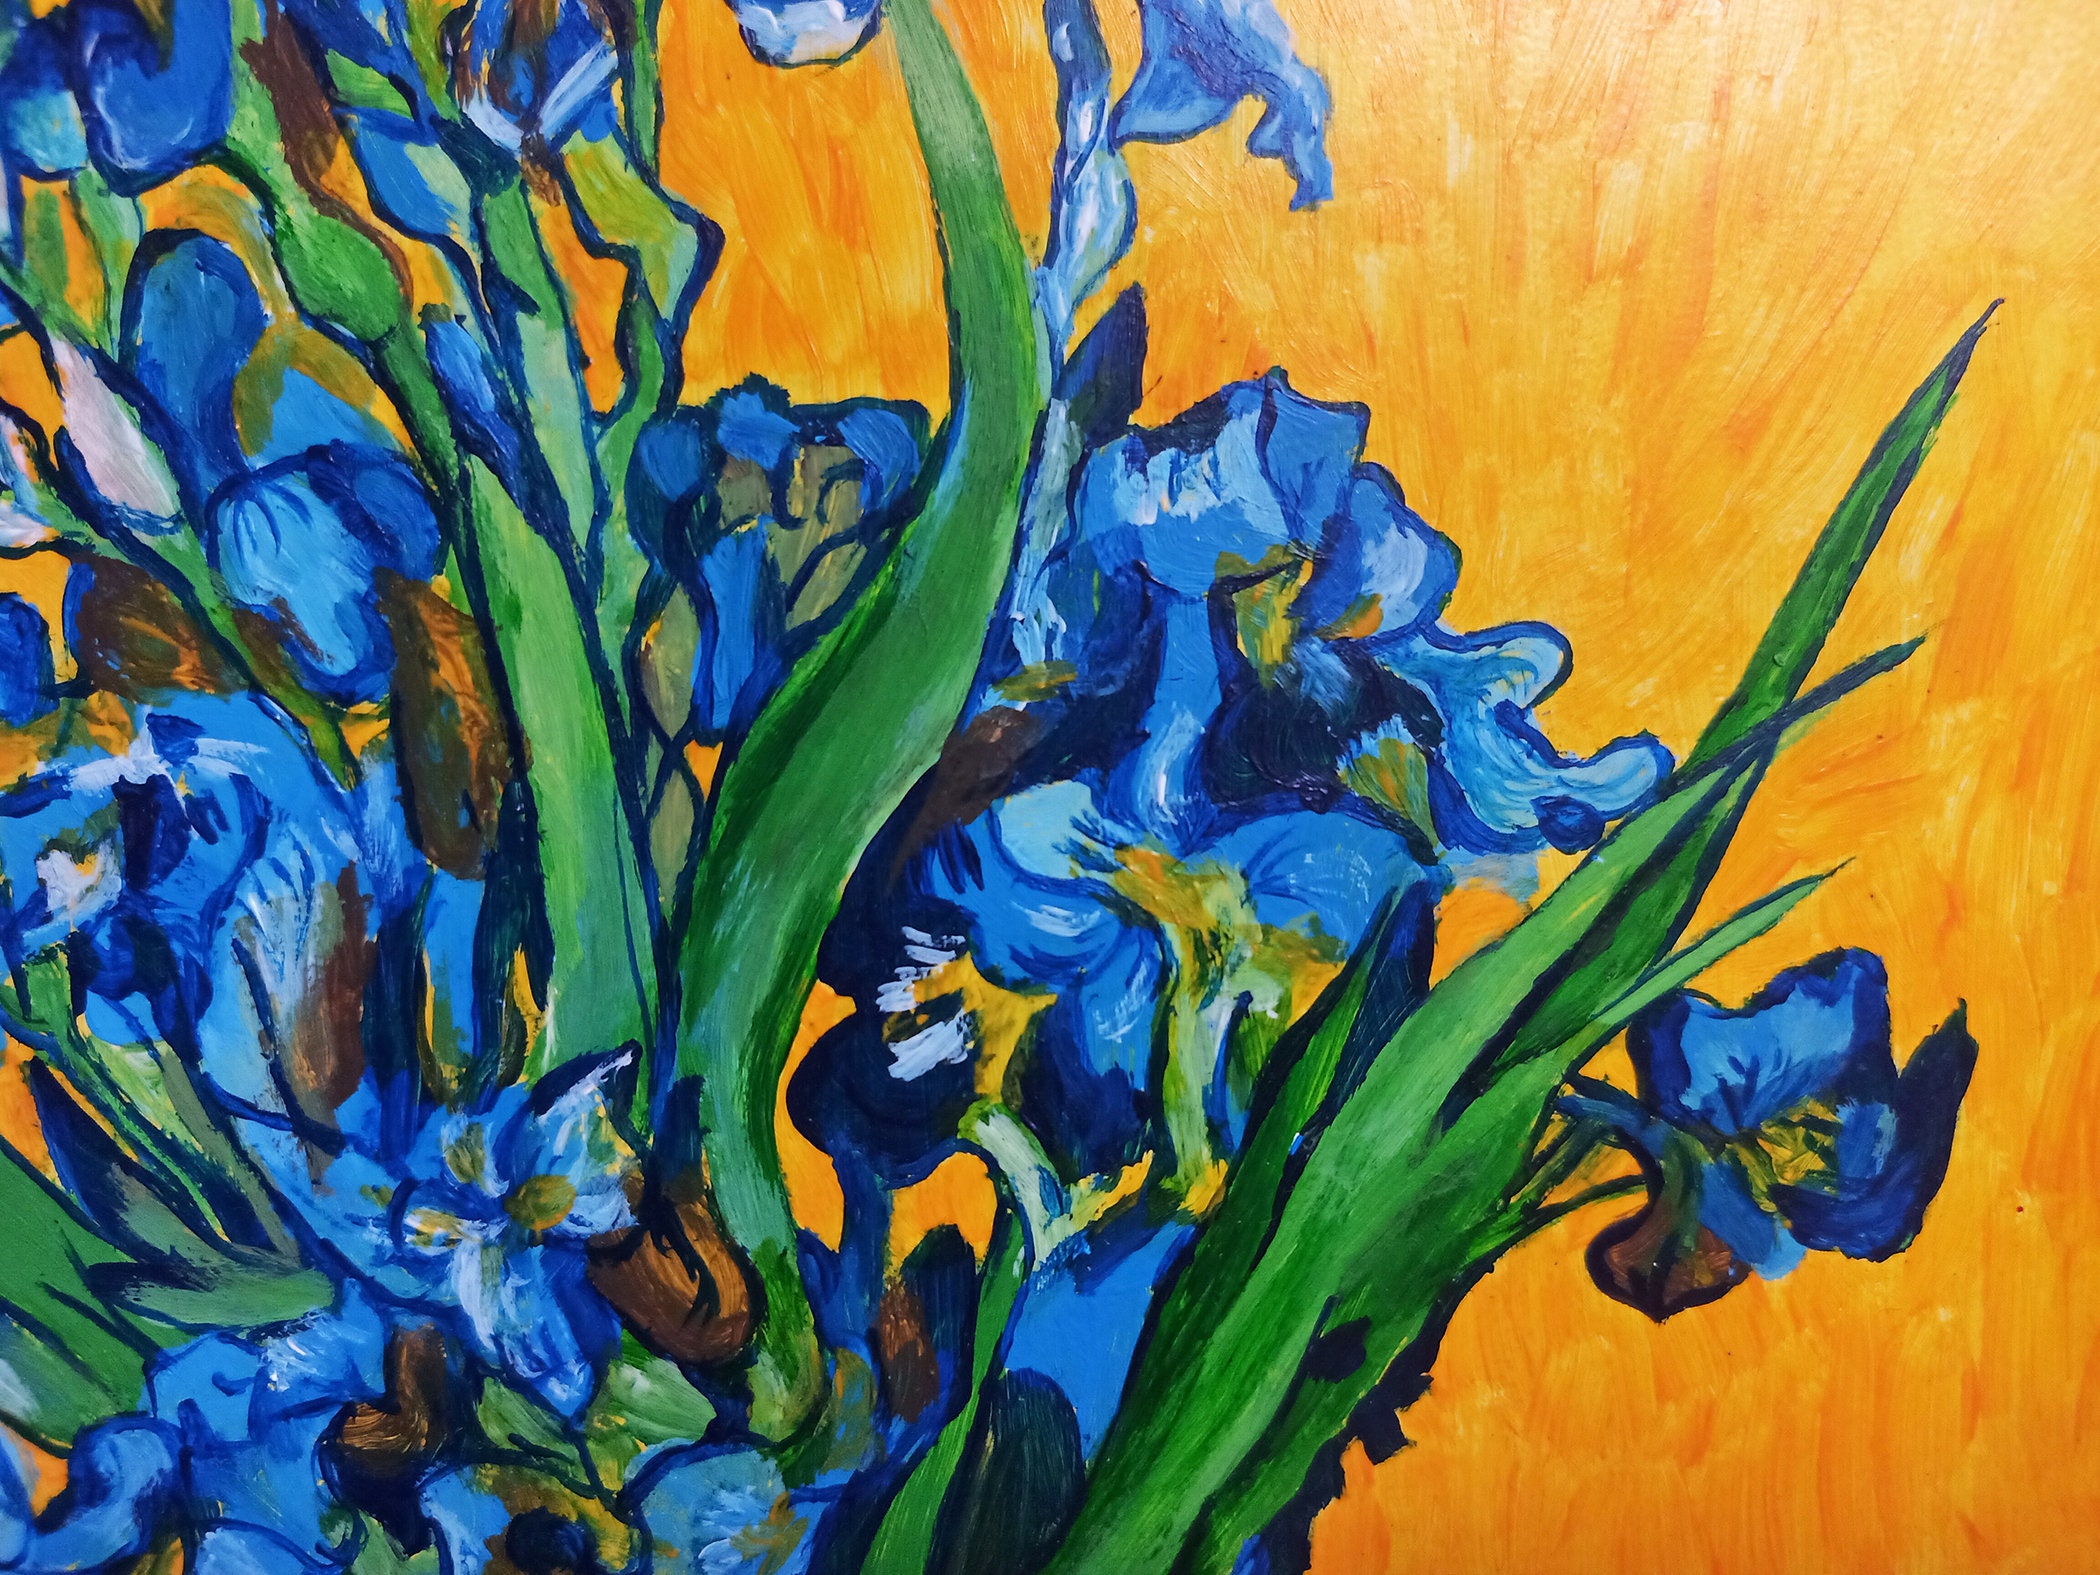 Van gogh irises classic painting reproductionvan gogh canvas | Etsy